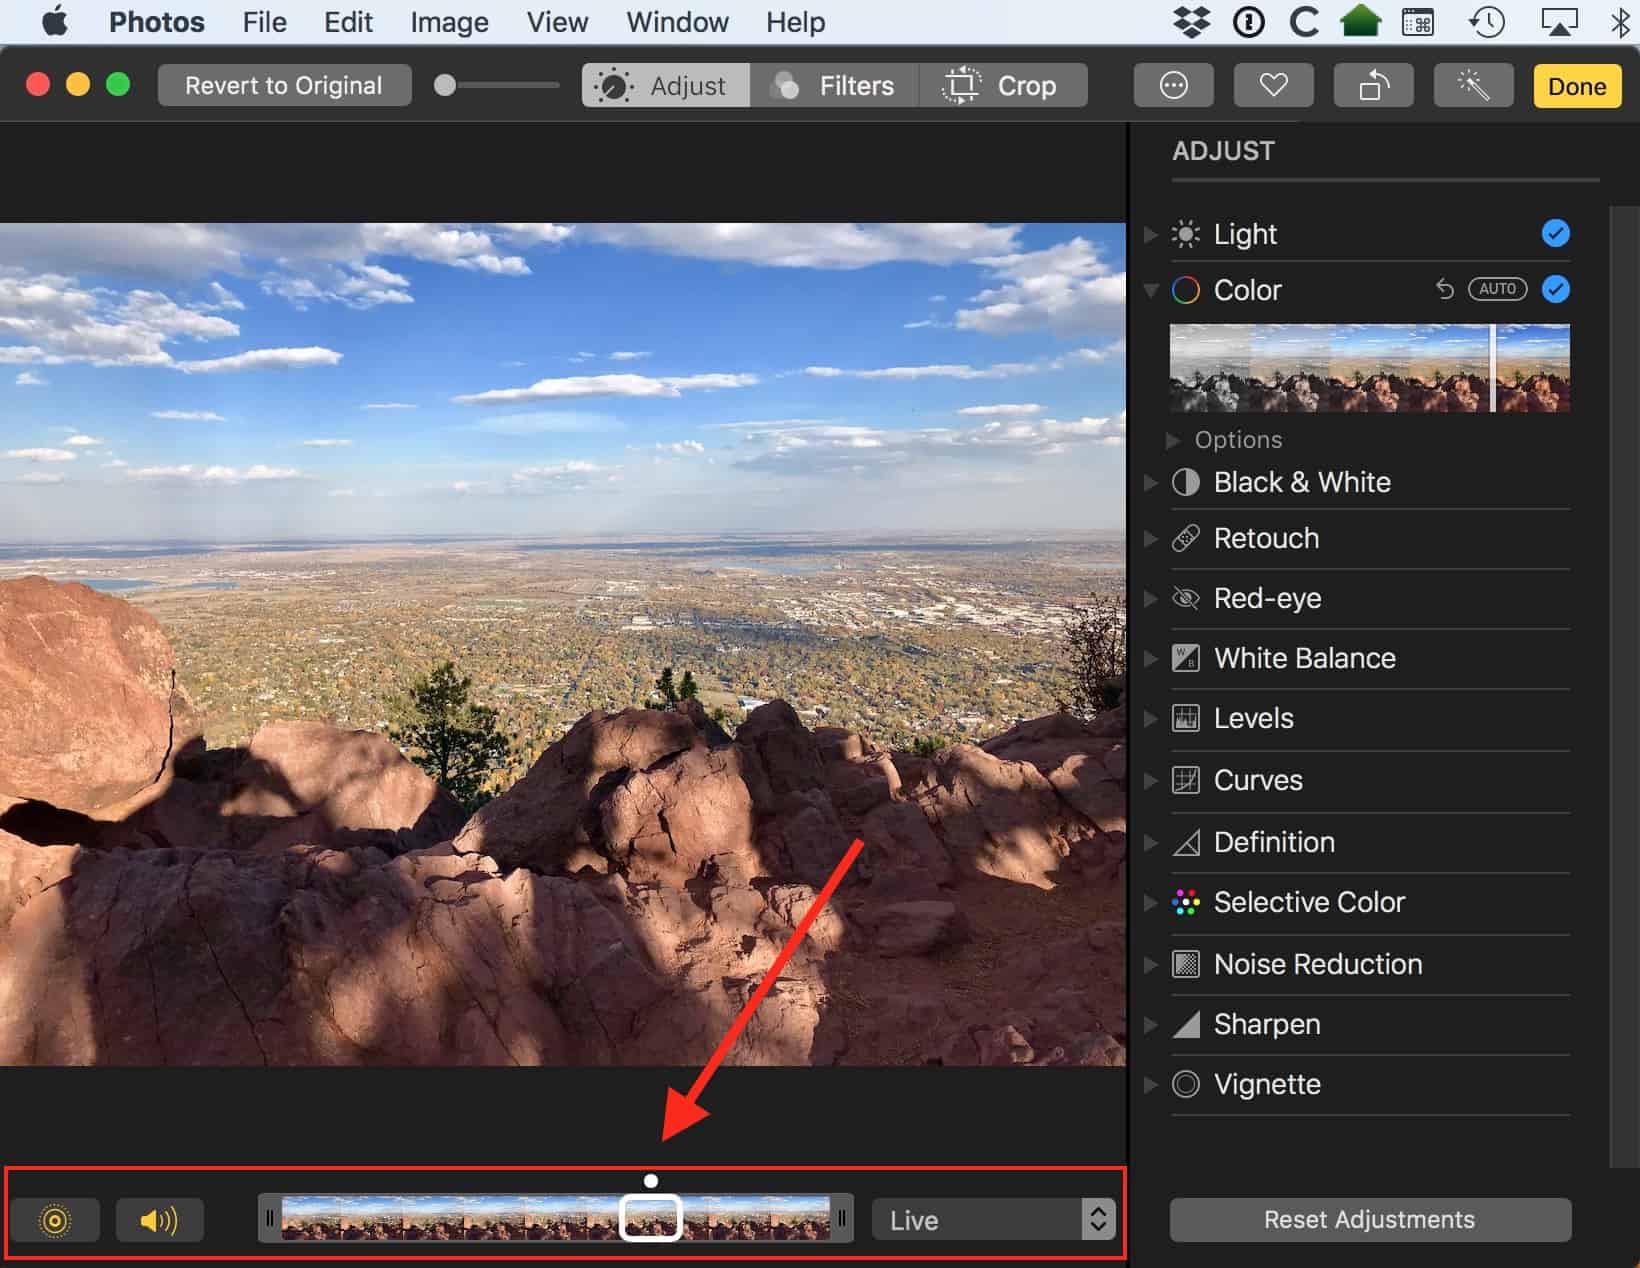 macOS High Sierra Live Photos Editing Tools in Photos app